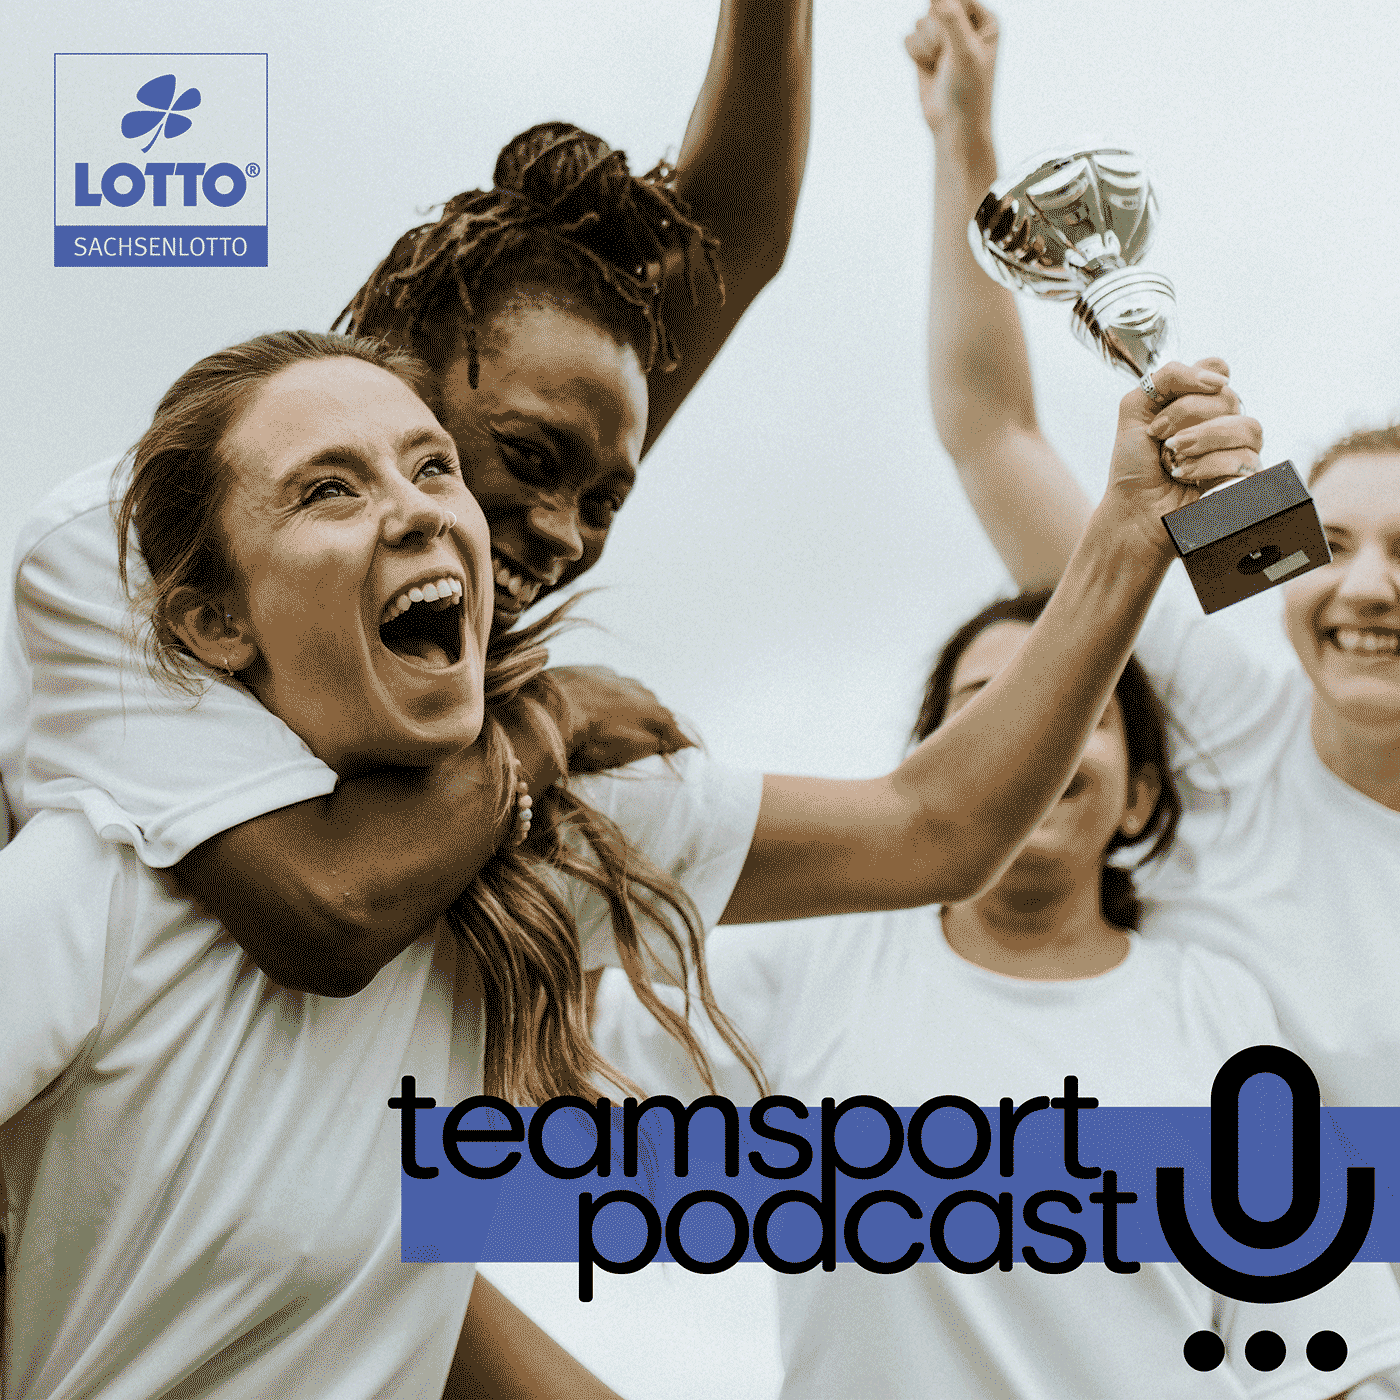 Sachsenlotto TEAMSPORT Podcast | Karsten Günther, DHfK Handball